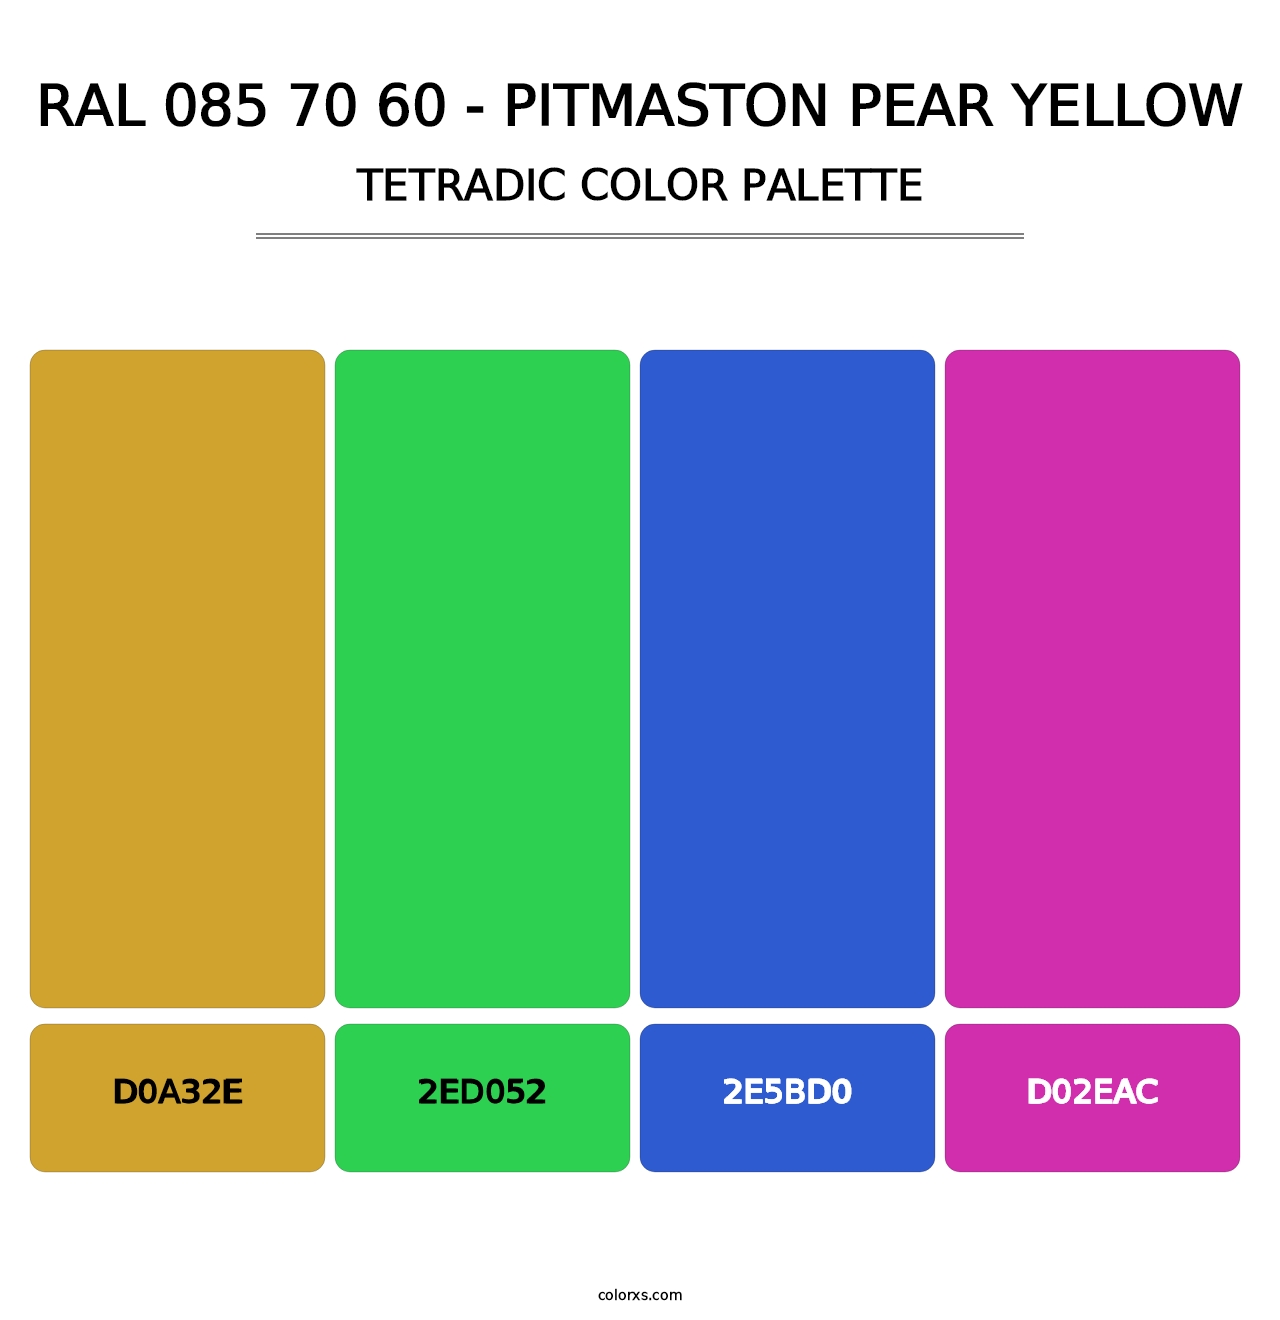 RAL 085 70 60 - Pitmaston Pear Yellow - Tetradic Color Palette